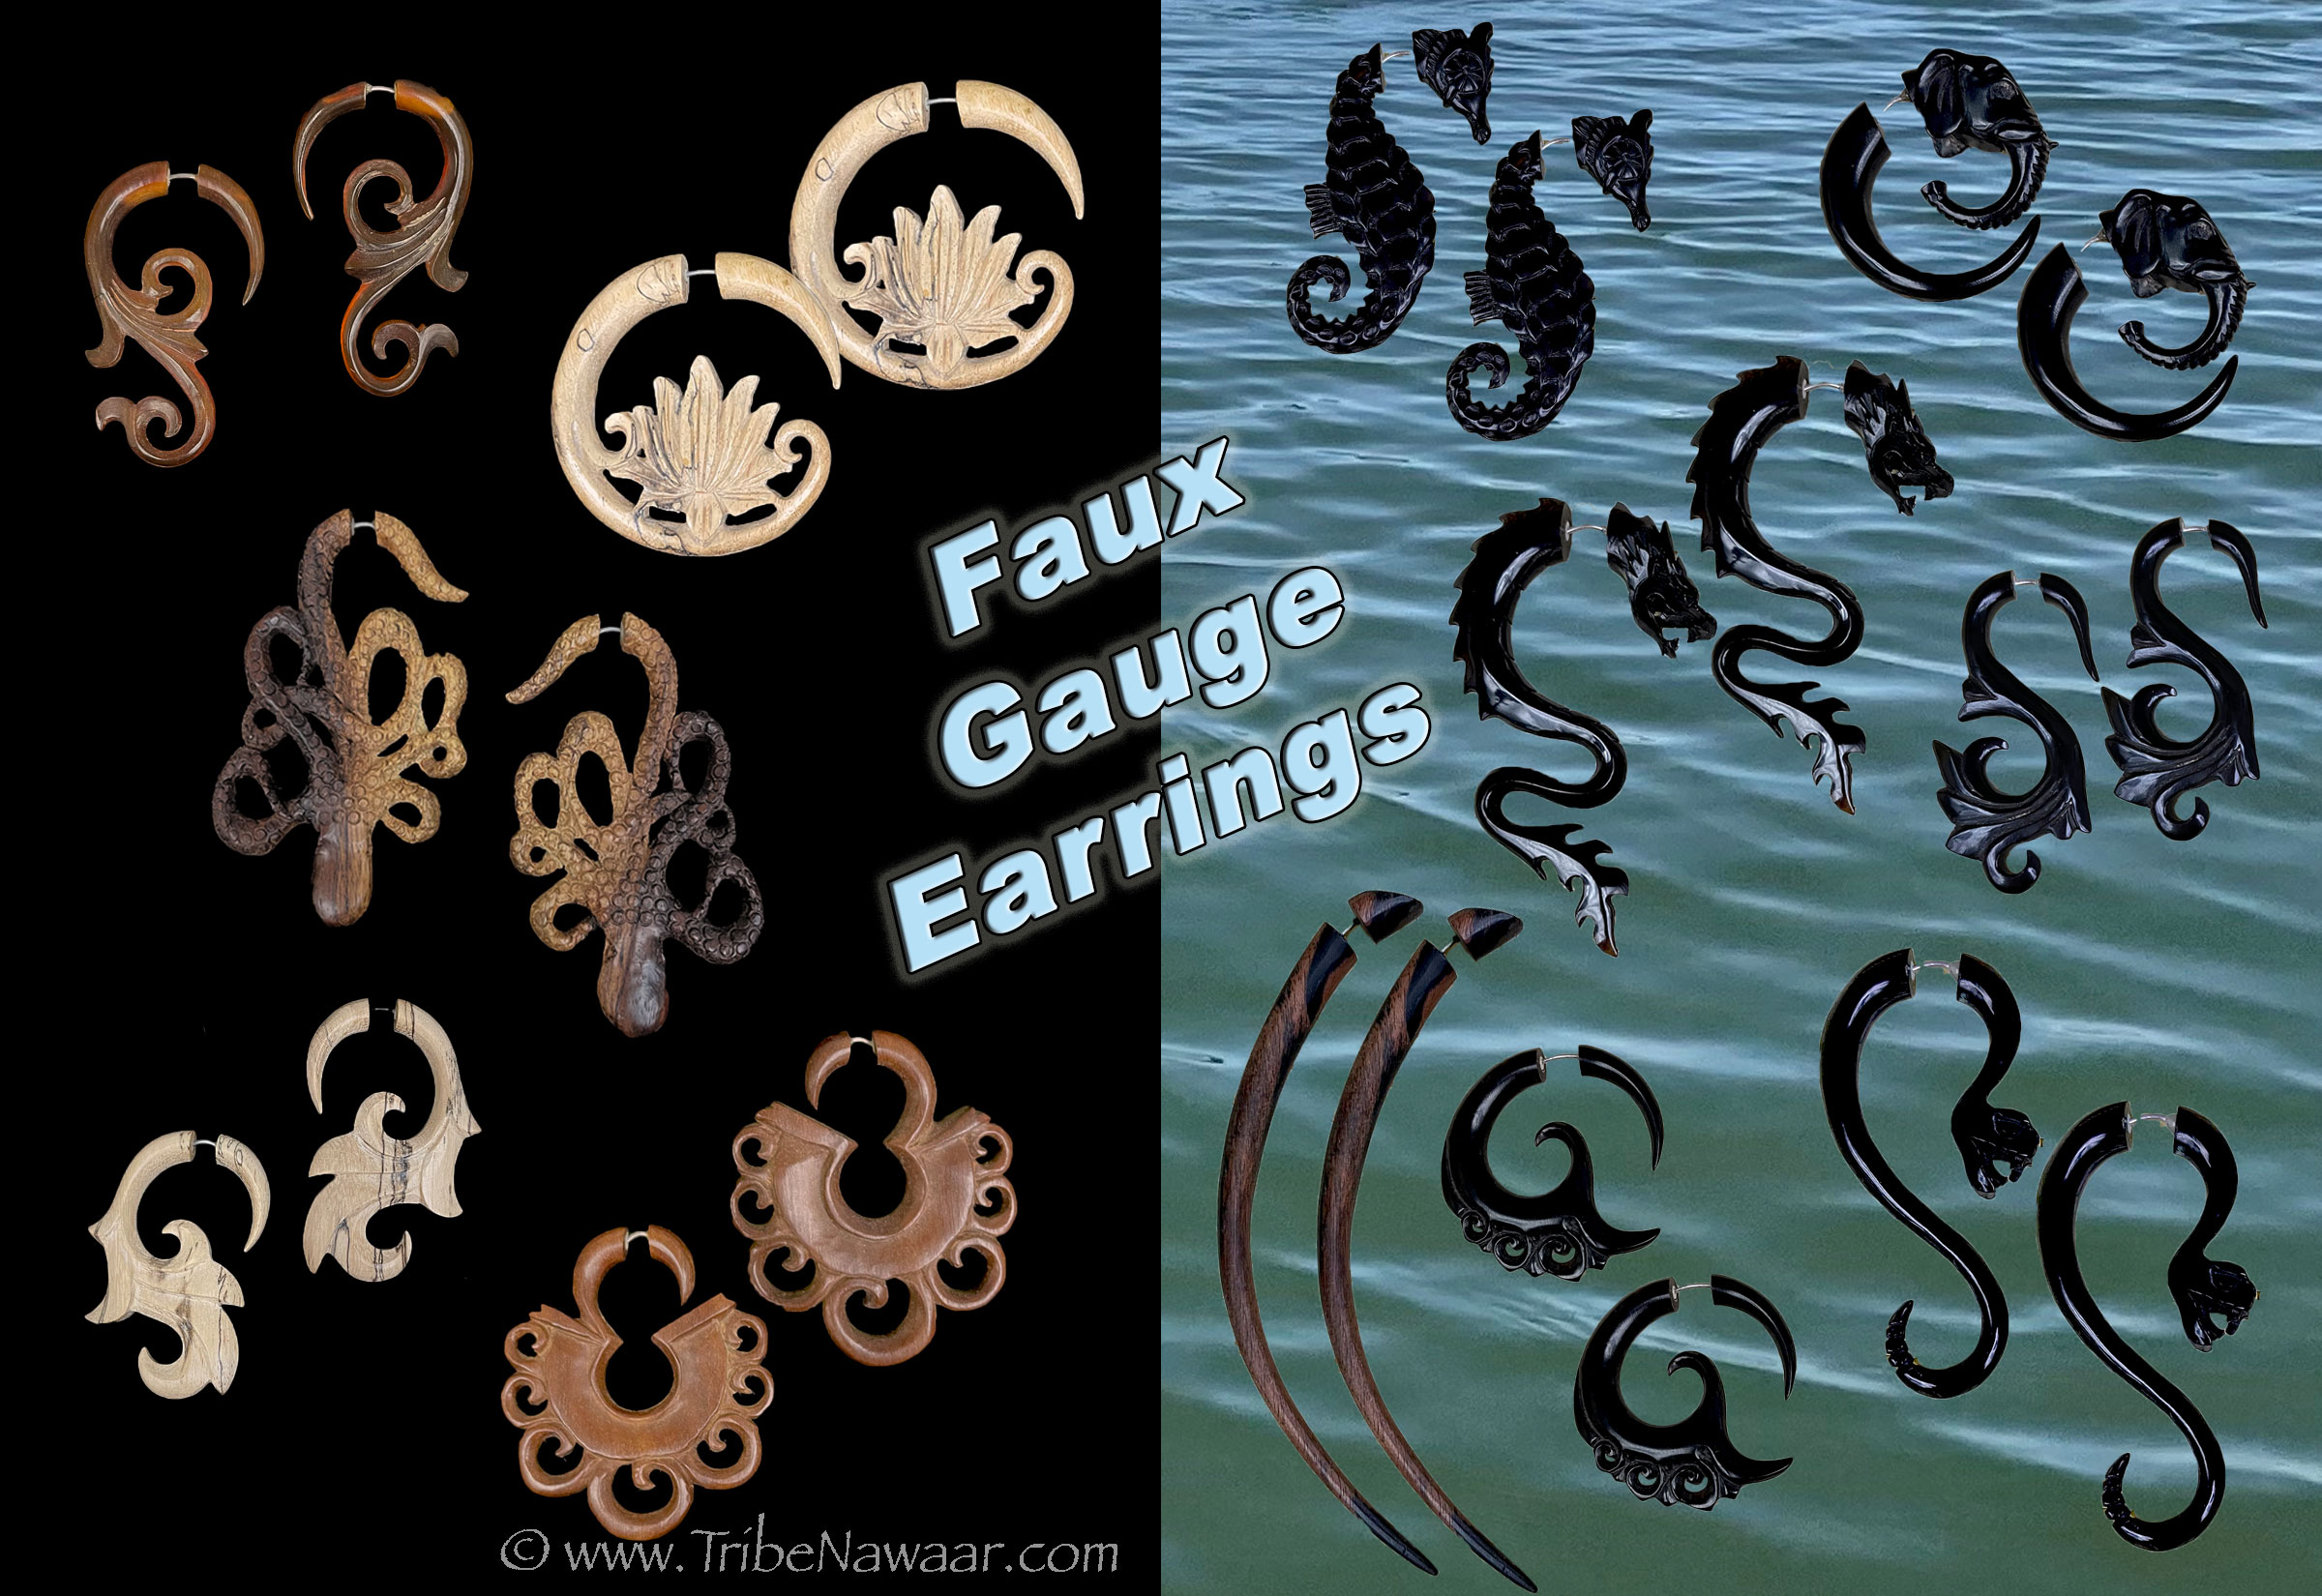 Faux gauge earrings available thru The Nawaar Marketplace at www.TribeNawaar.com